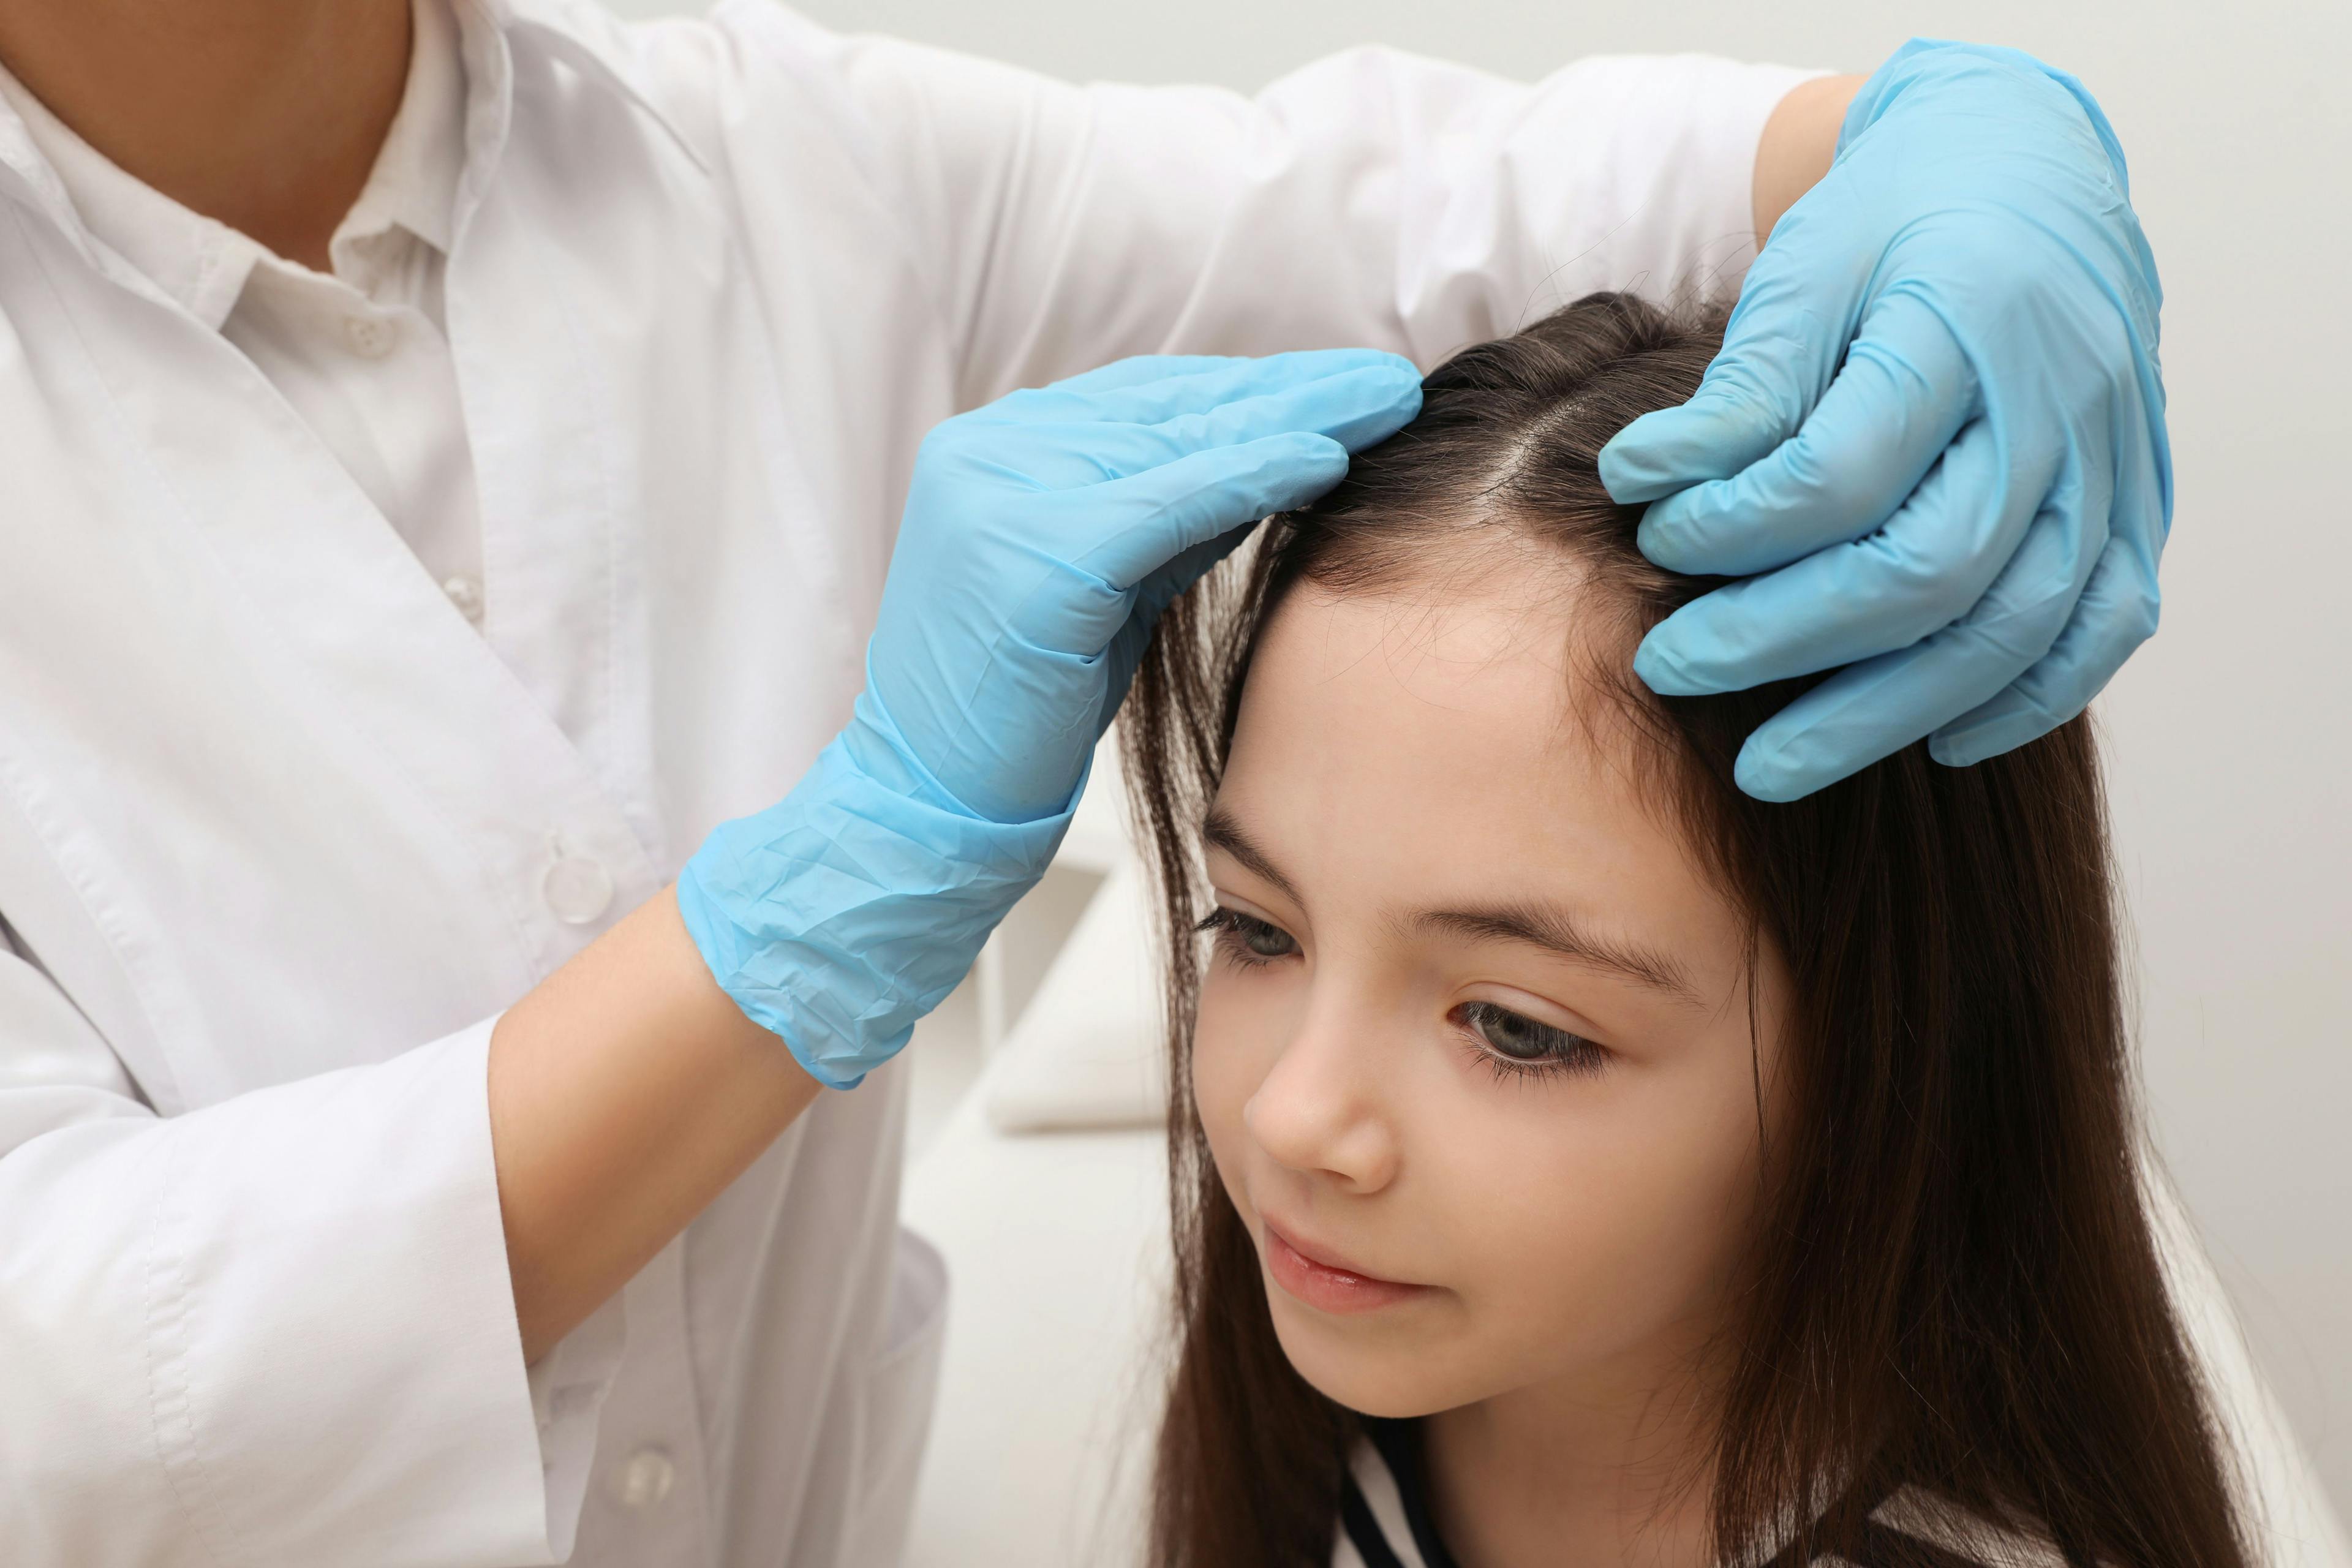 Doctor examining child's scalp | Image Credit: New Africa - stock.adobe.com